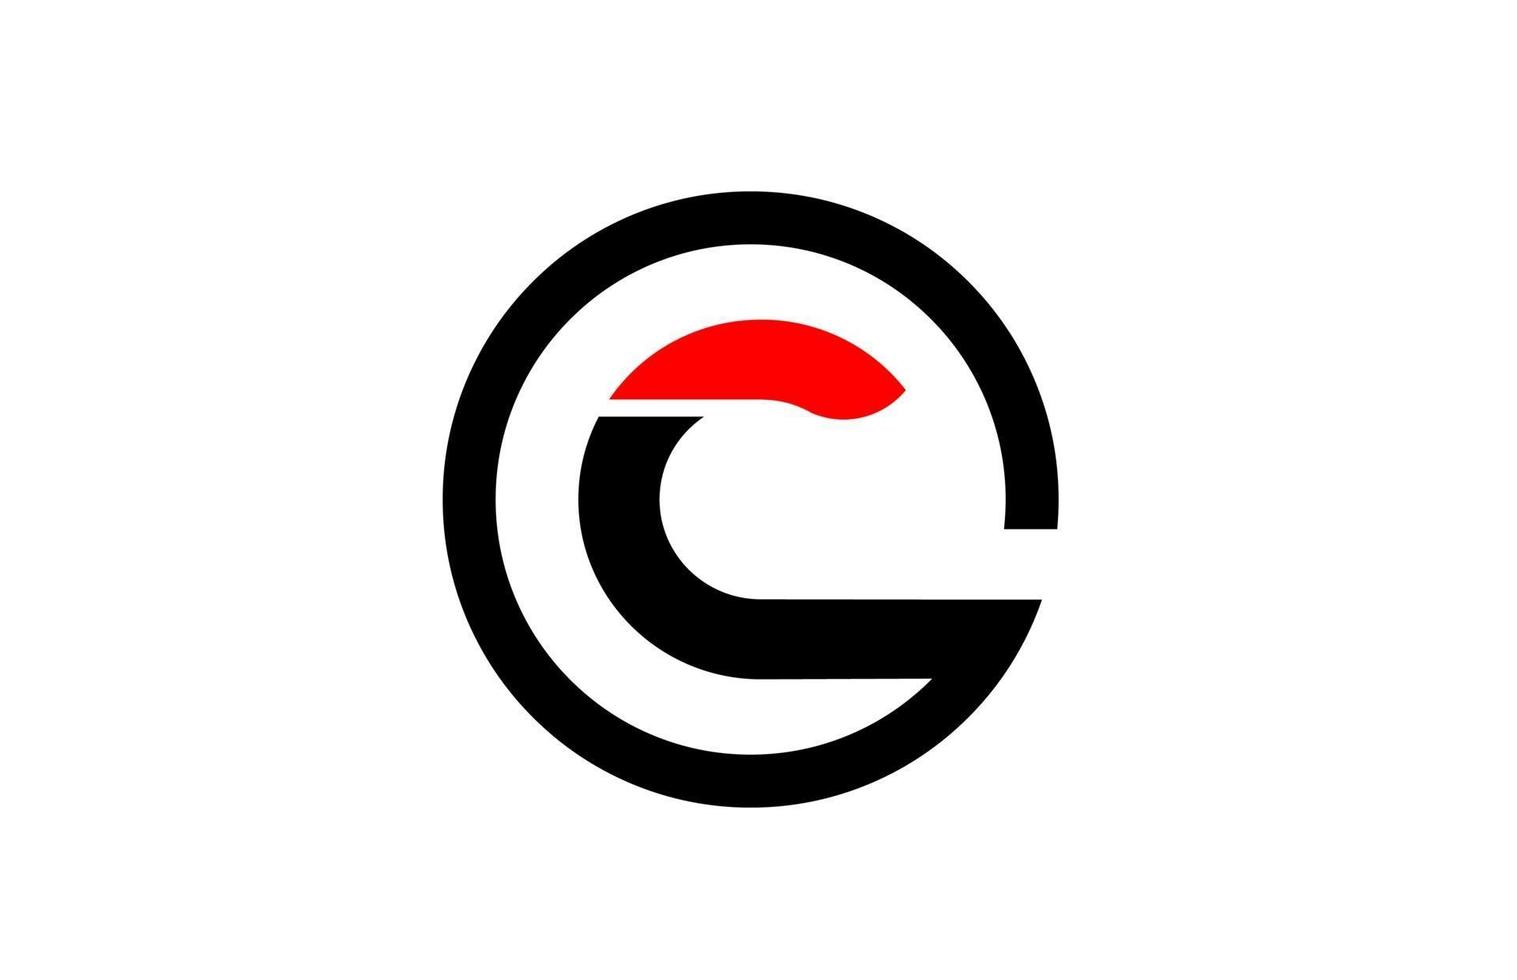 desenho da letra c do alfabeto circular para o ícone do logotipo da empresa vetor